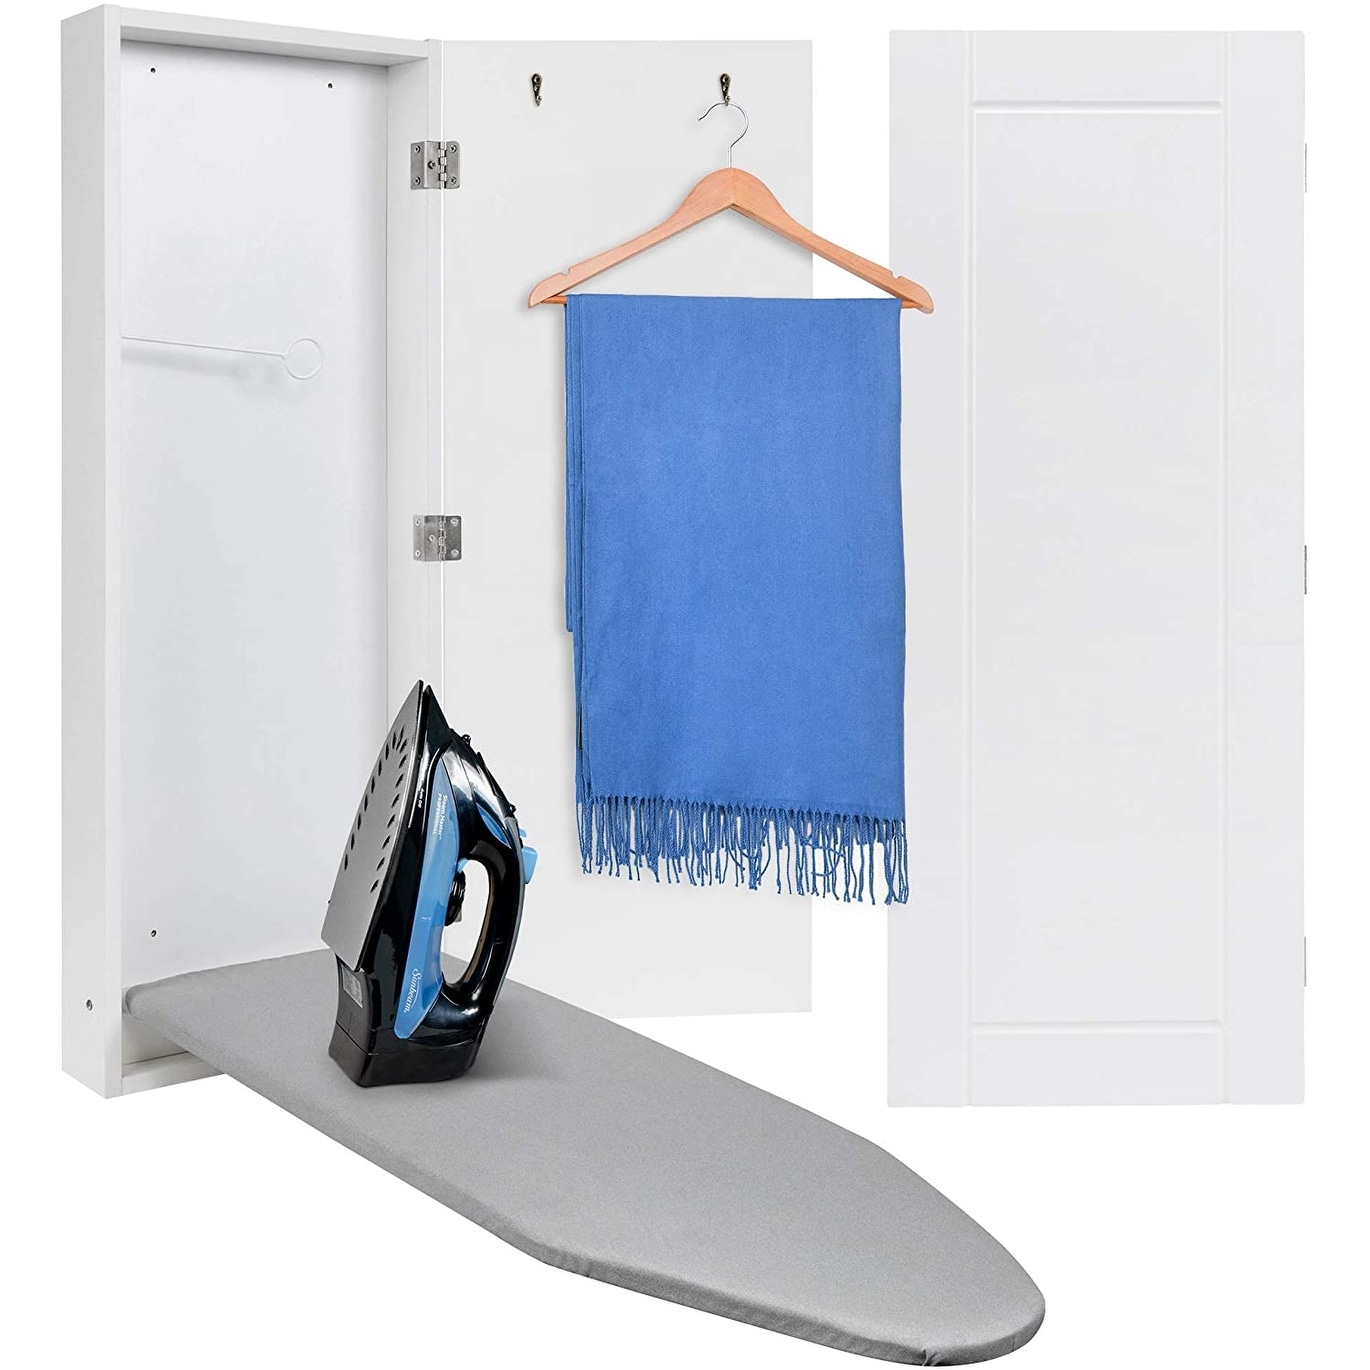 Finista _ Wardrobe Mounted Folding Ironing Board _ Home Storage Saving Solution 